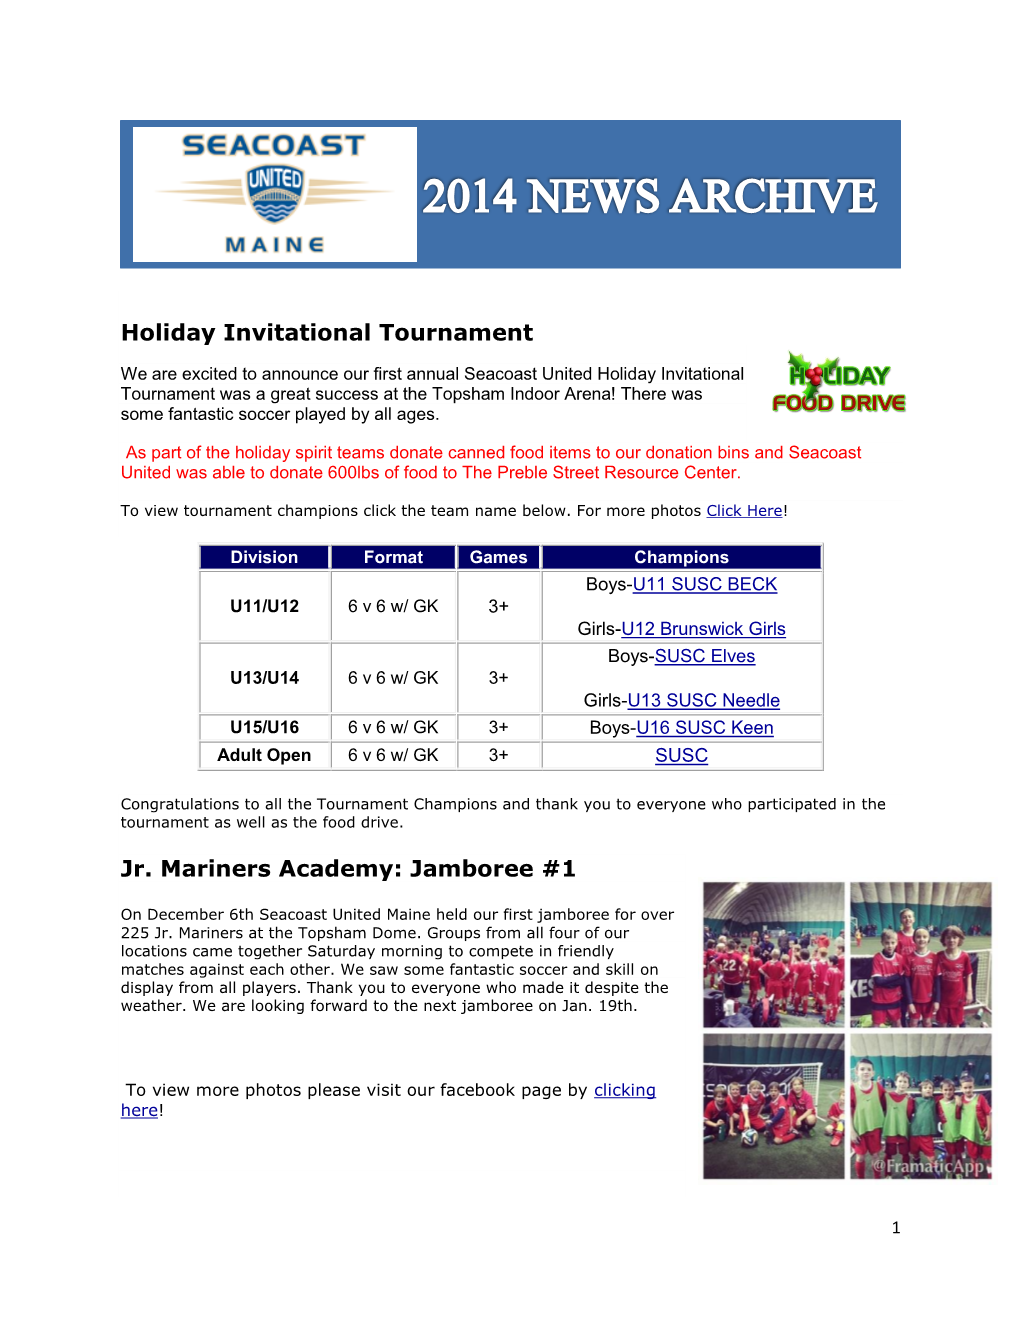 Holiday Invitational Tournament Jr. Mariners Academy: Jamboree #1